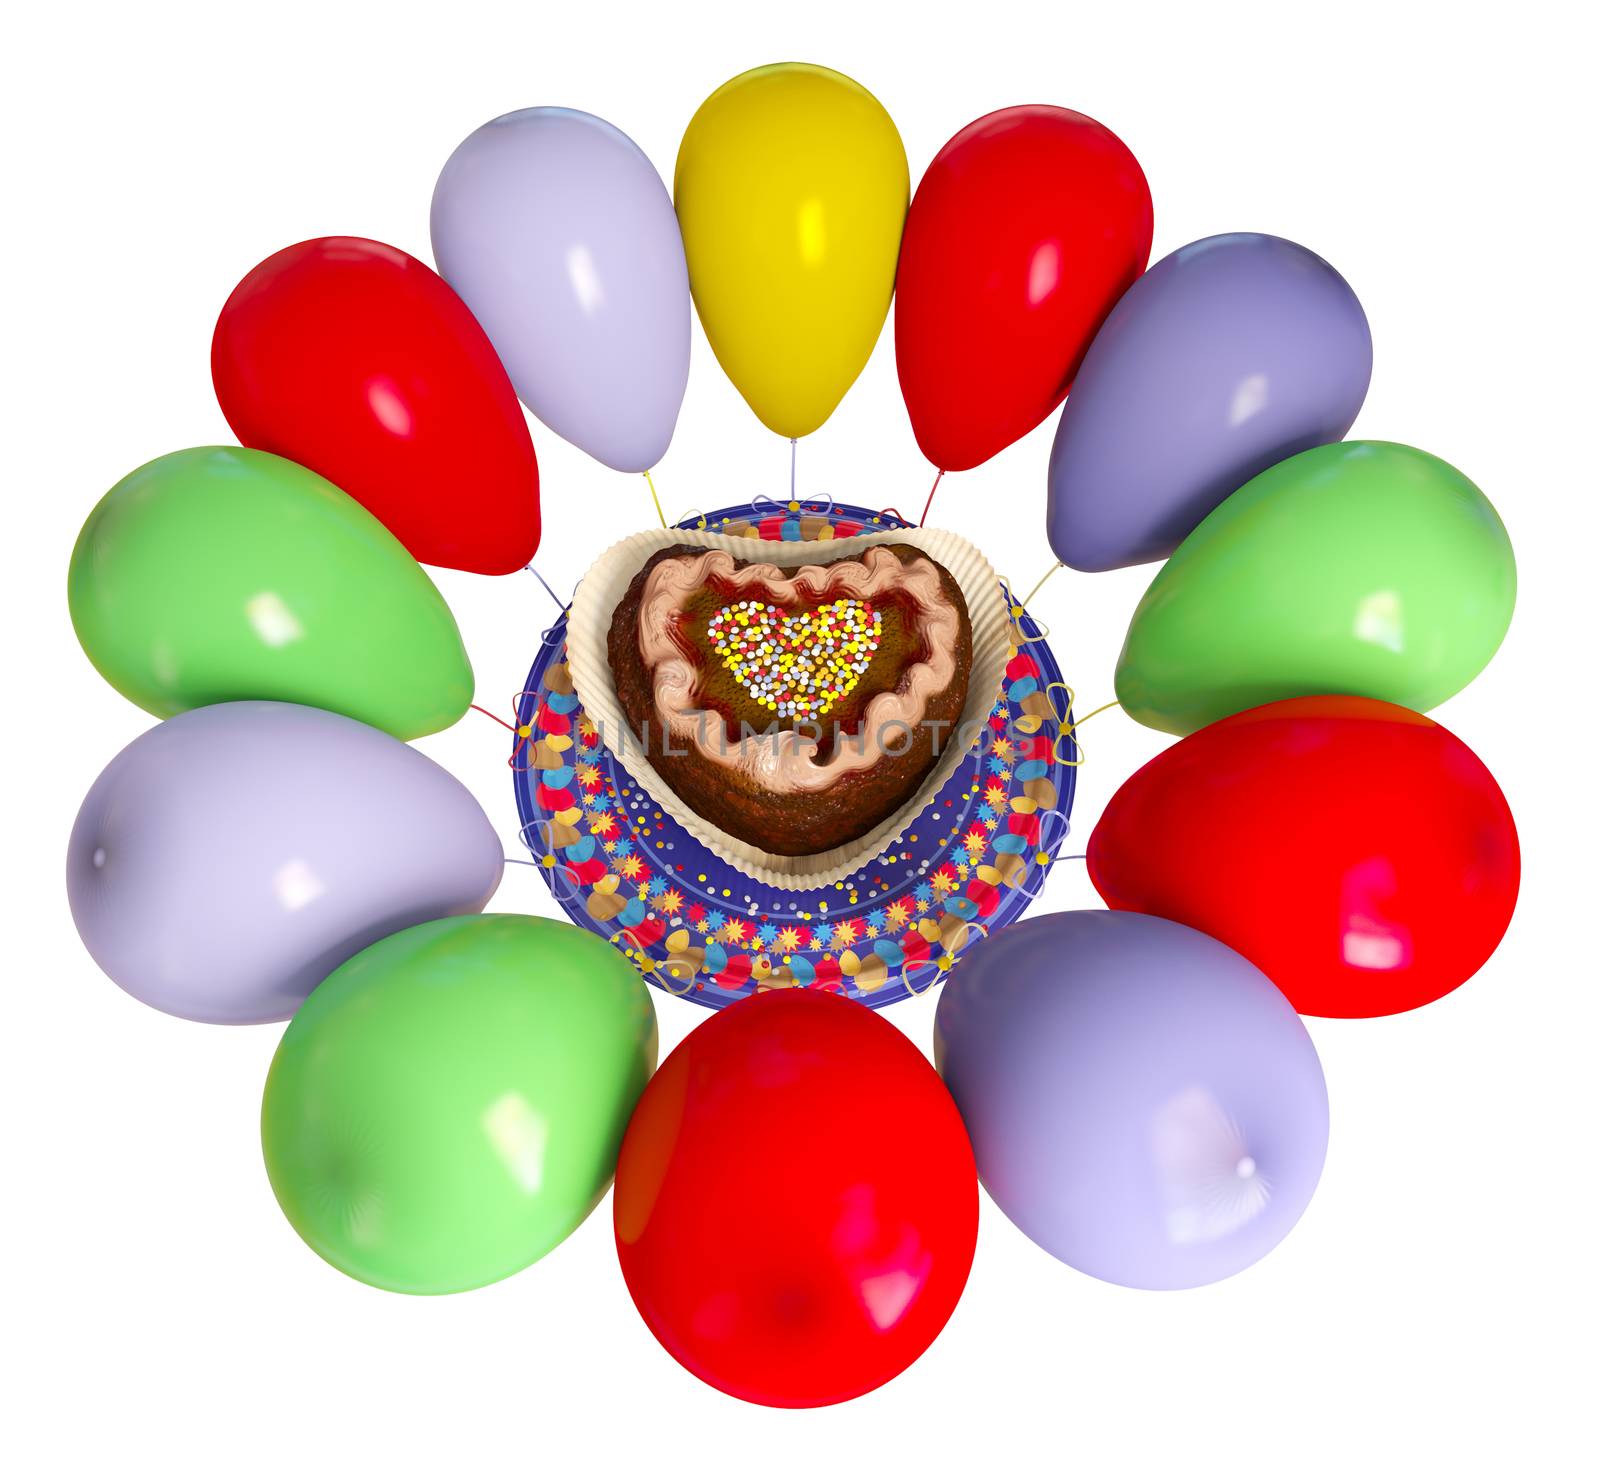 birthday decorative cake and balloons celebration background on isolate white by denisgo